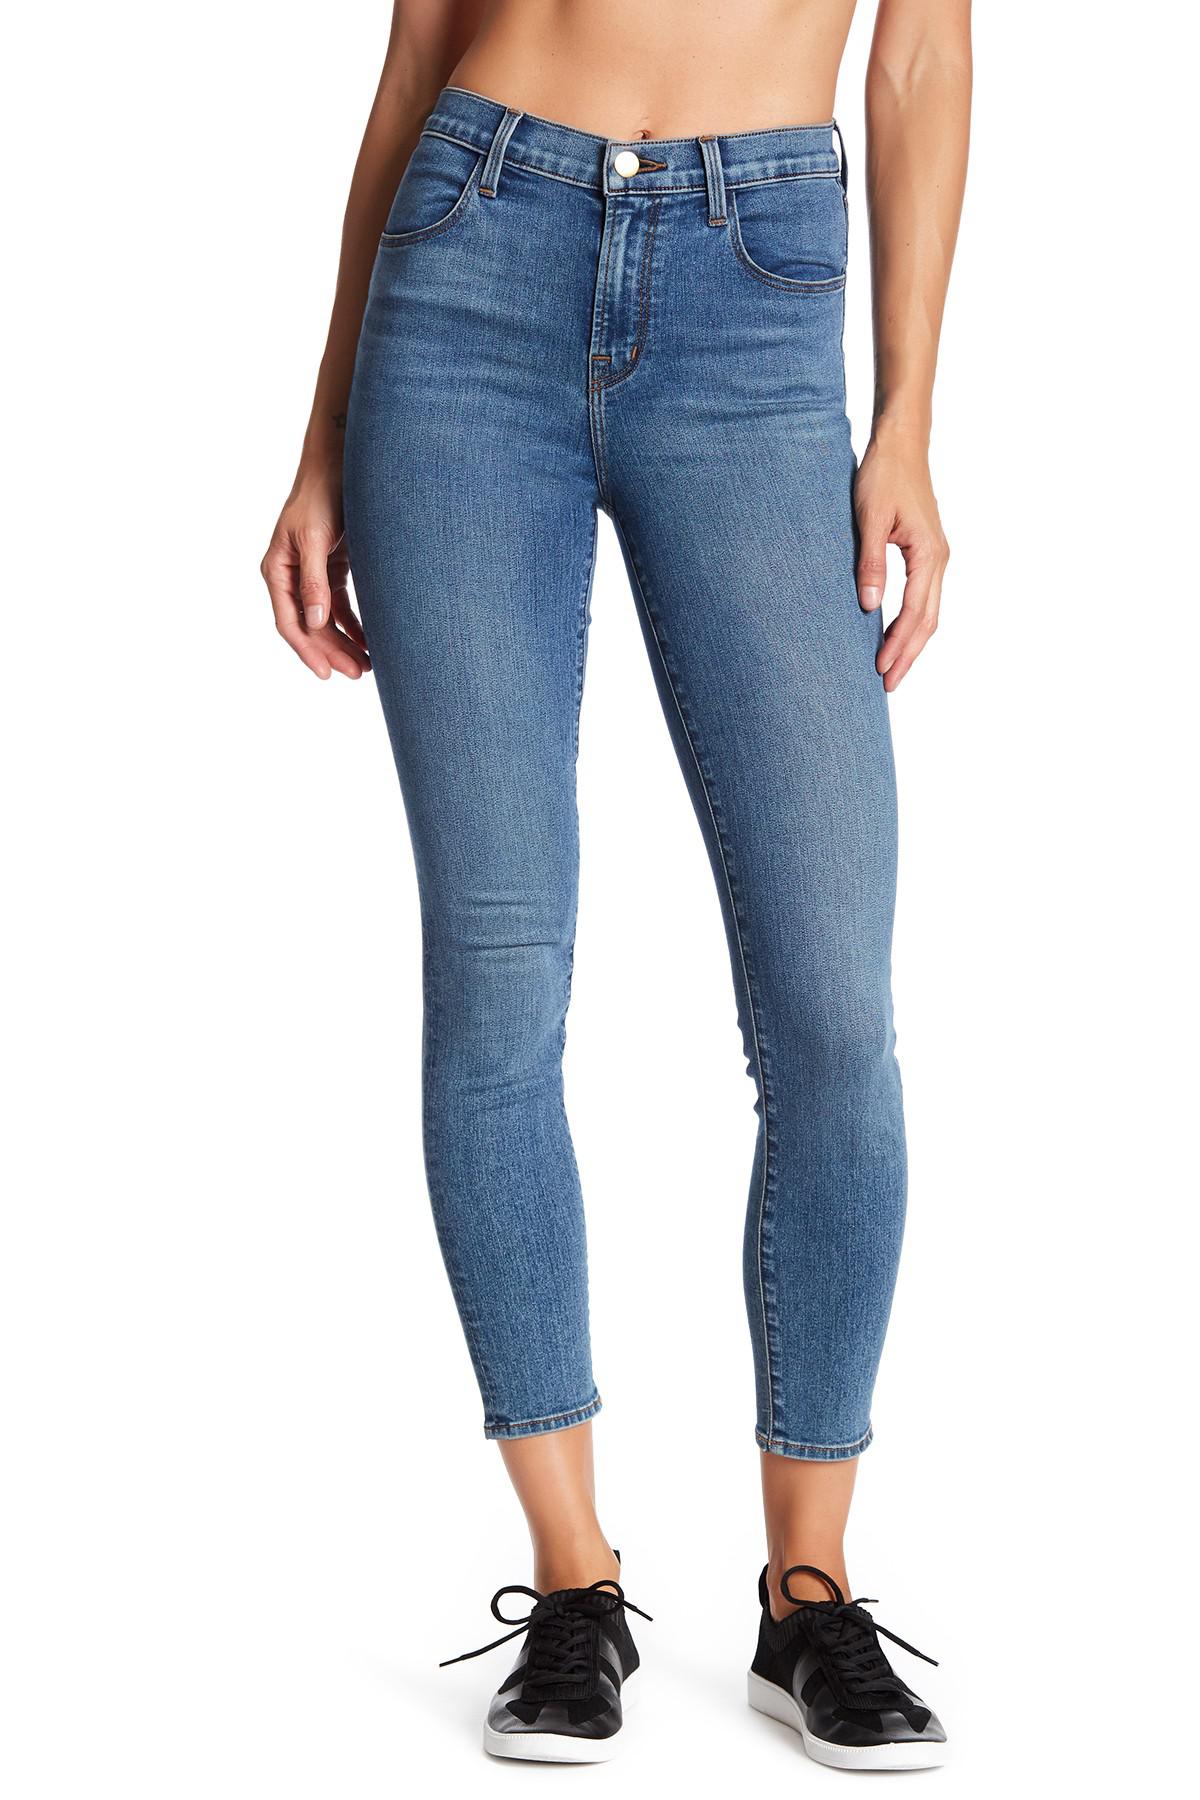 Lyst - J Brand Alana High Rise Crop Skinny Jeans in Blue